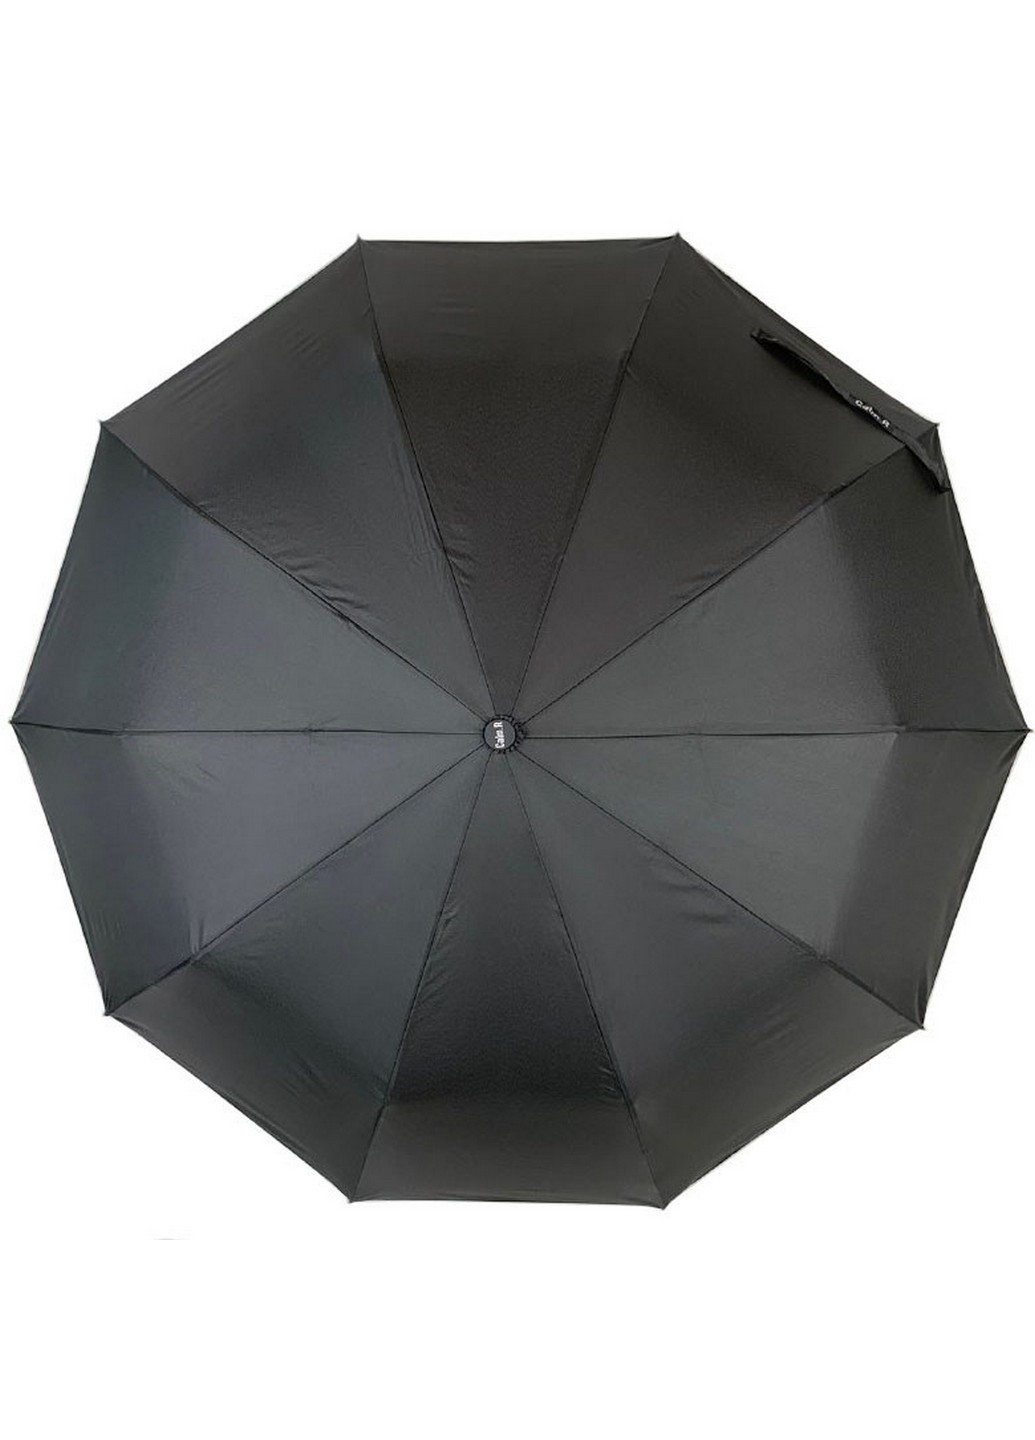 Мужской зонт полуавтомат 98 см Calm Rain (259265165)